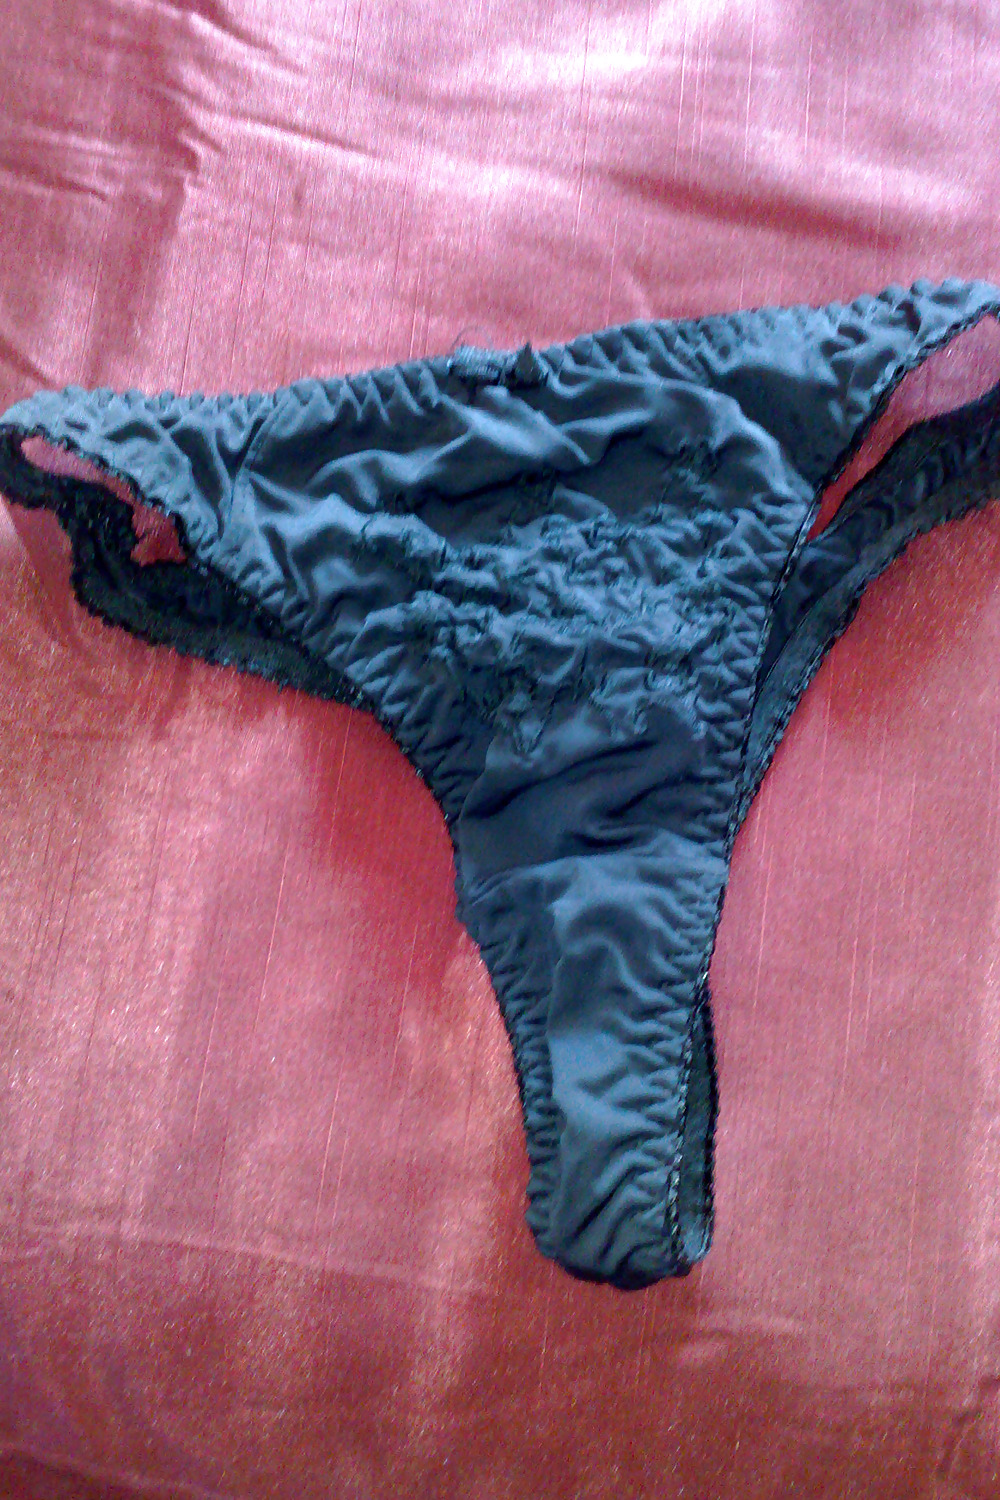 My wifes underwear drawers #2400006